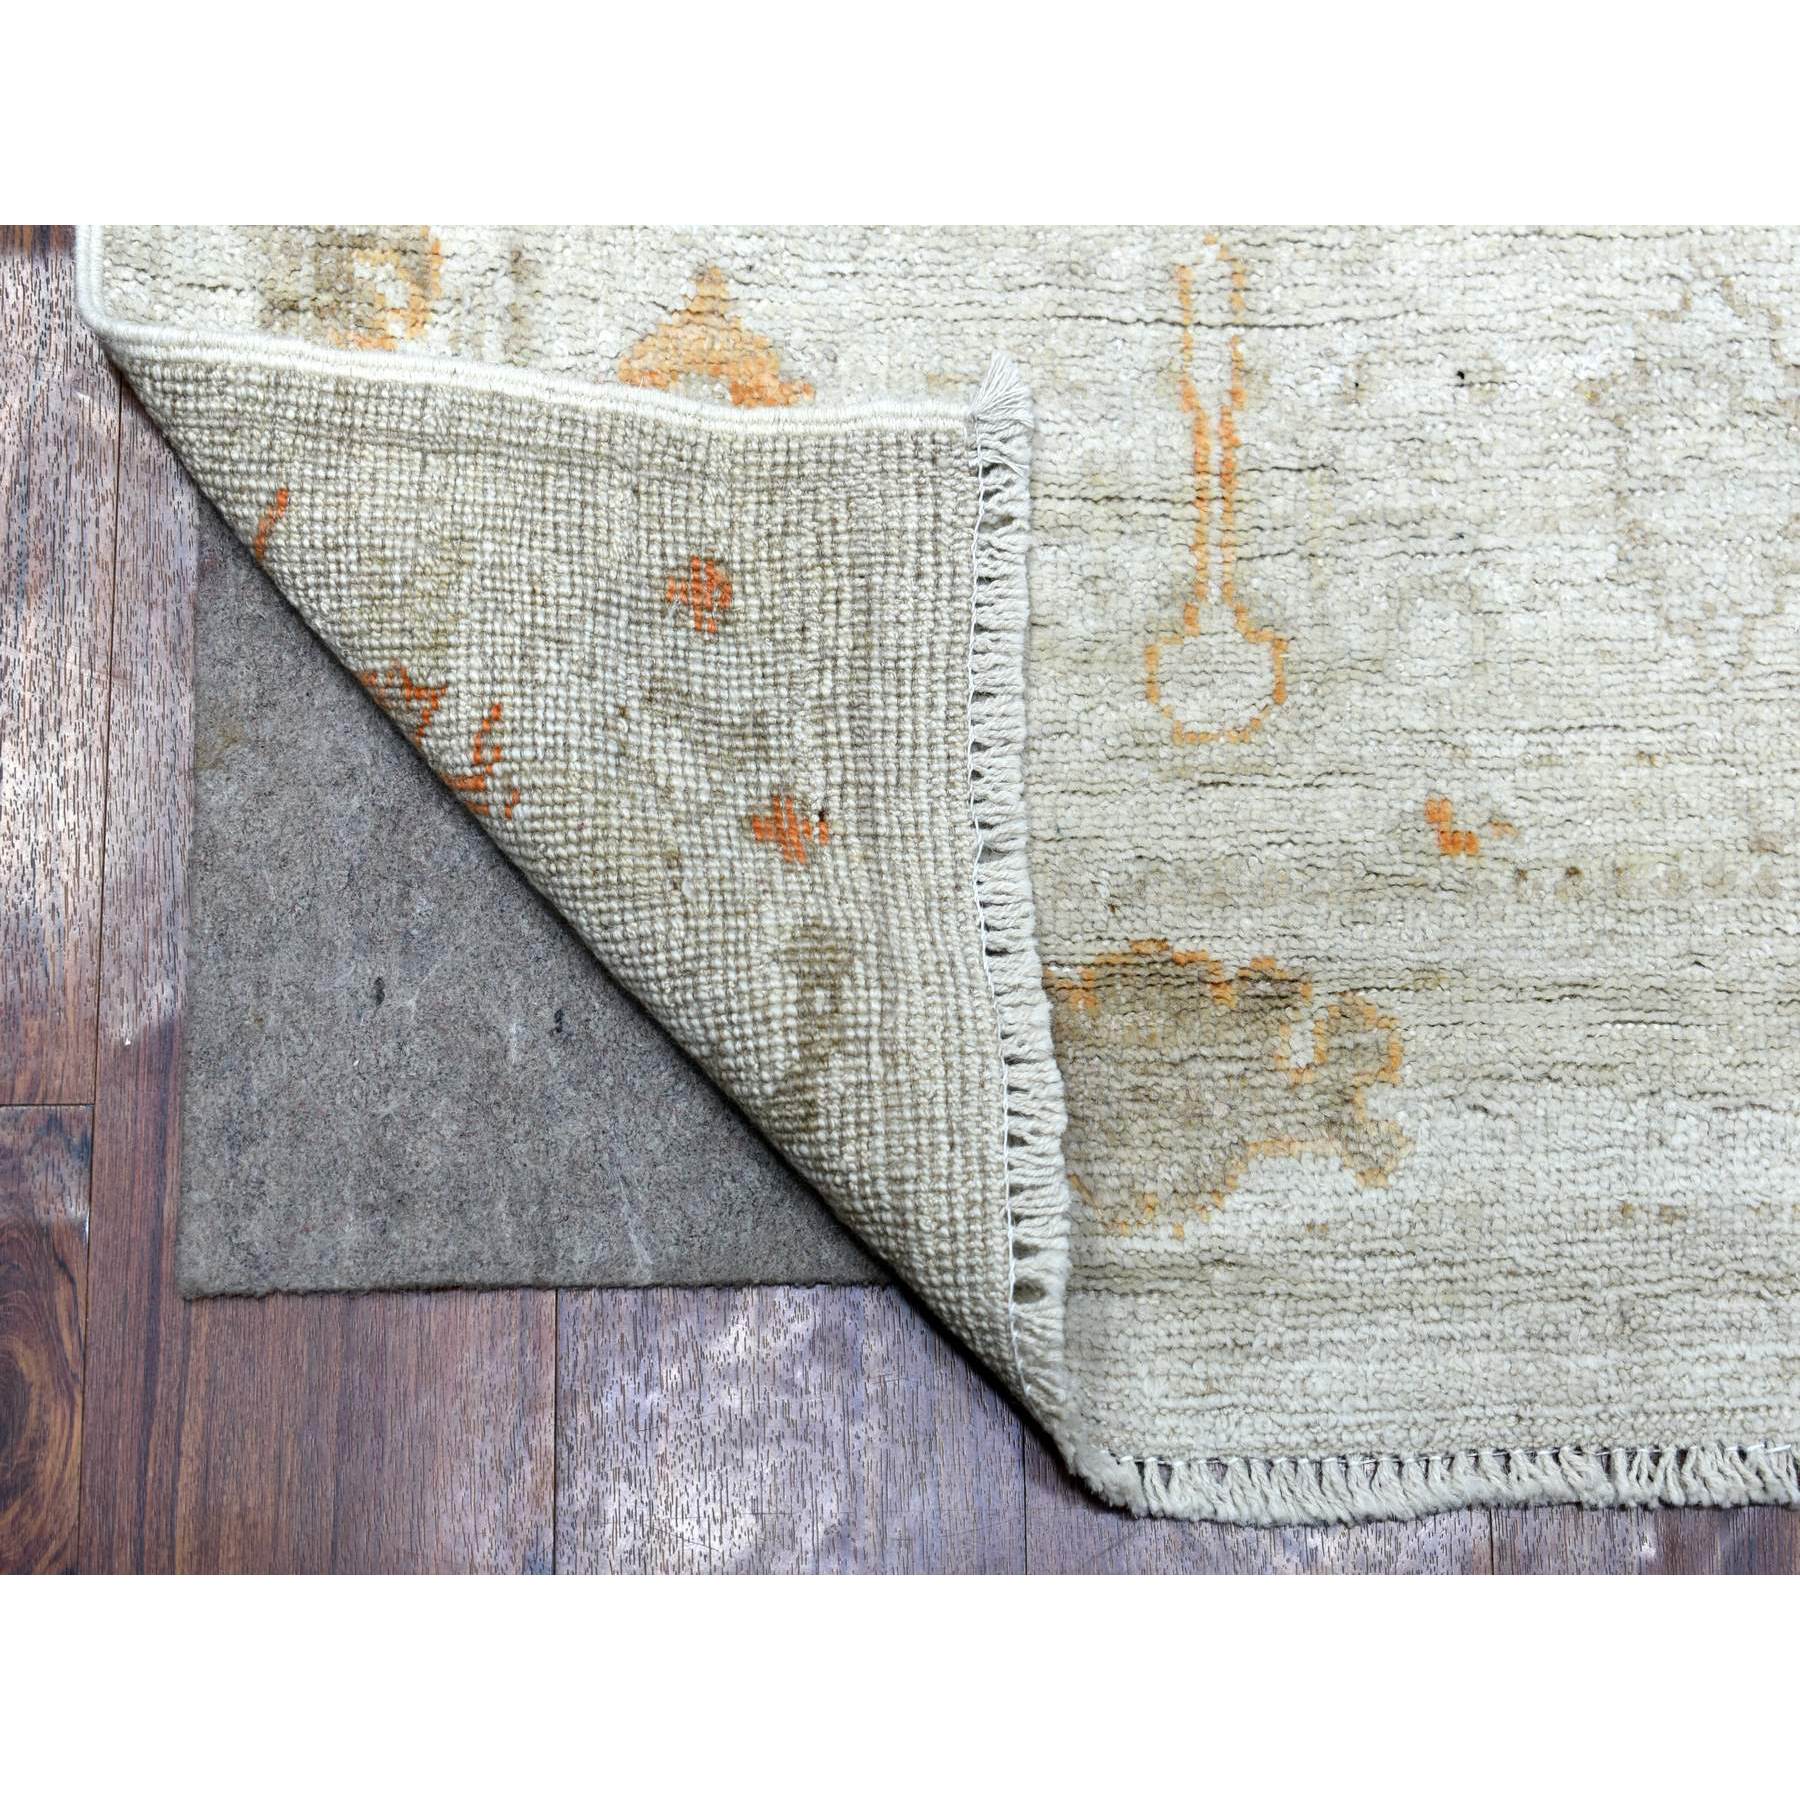 2'5"x13'9" Hand Woven Gray Angora Ushak with A Floral Eye Catching Pattern Organic Wool Oriental XL Runner Rug 